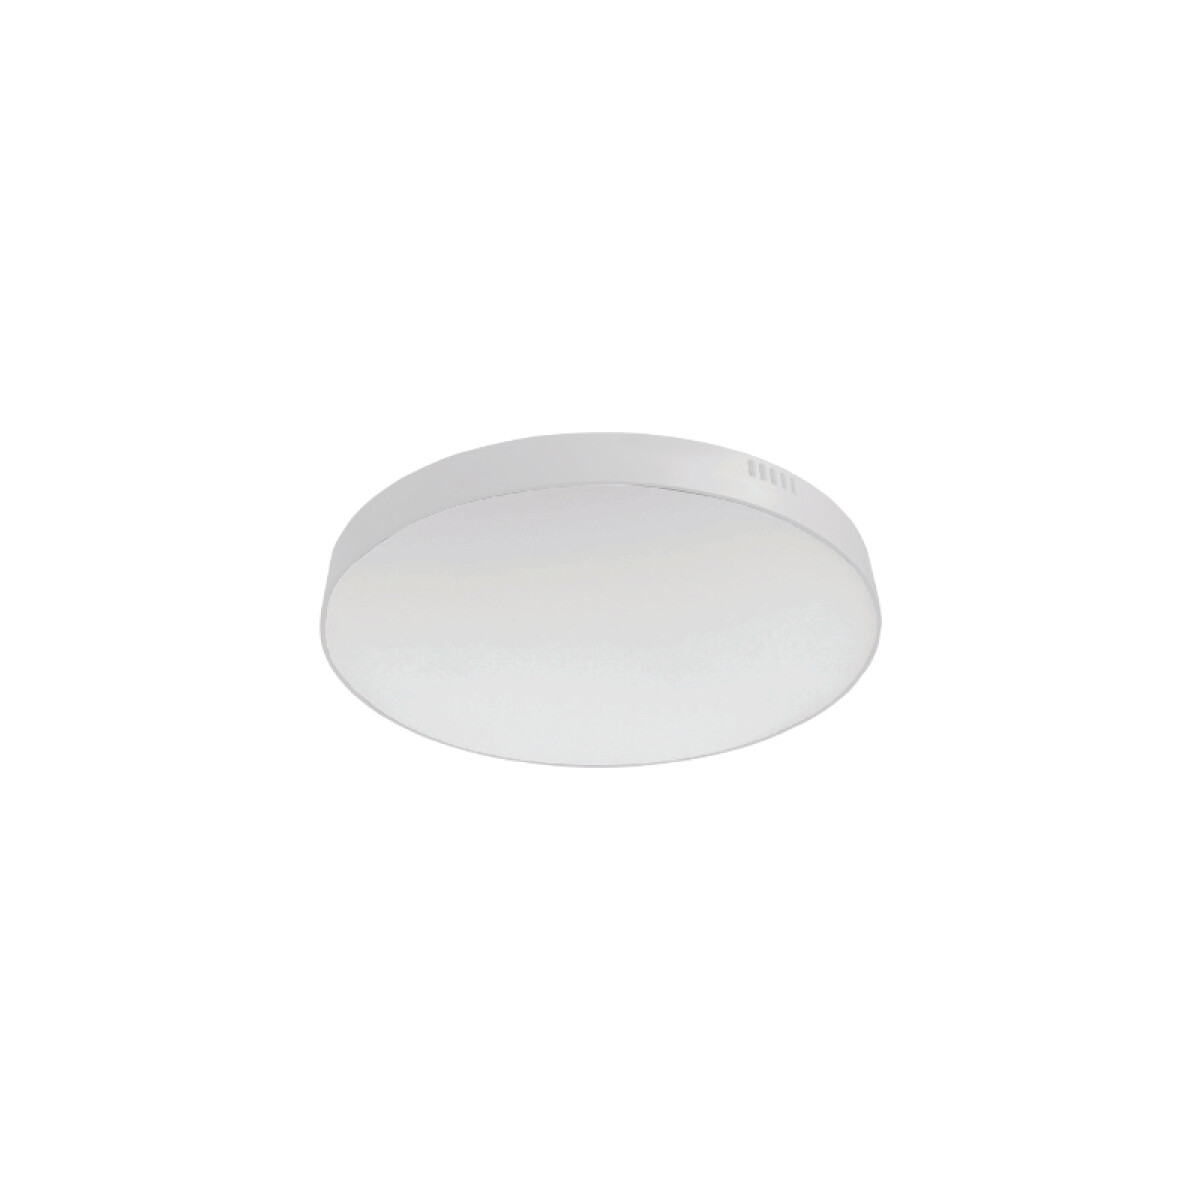 Plafón LED redondo 8W blanco, luz cálida Ø111mm - NV2132 